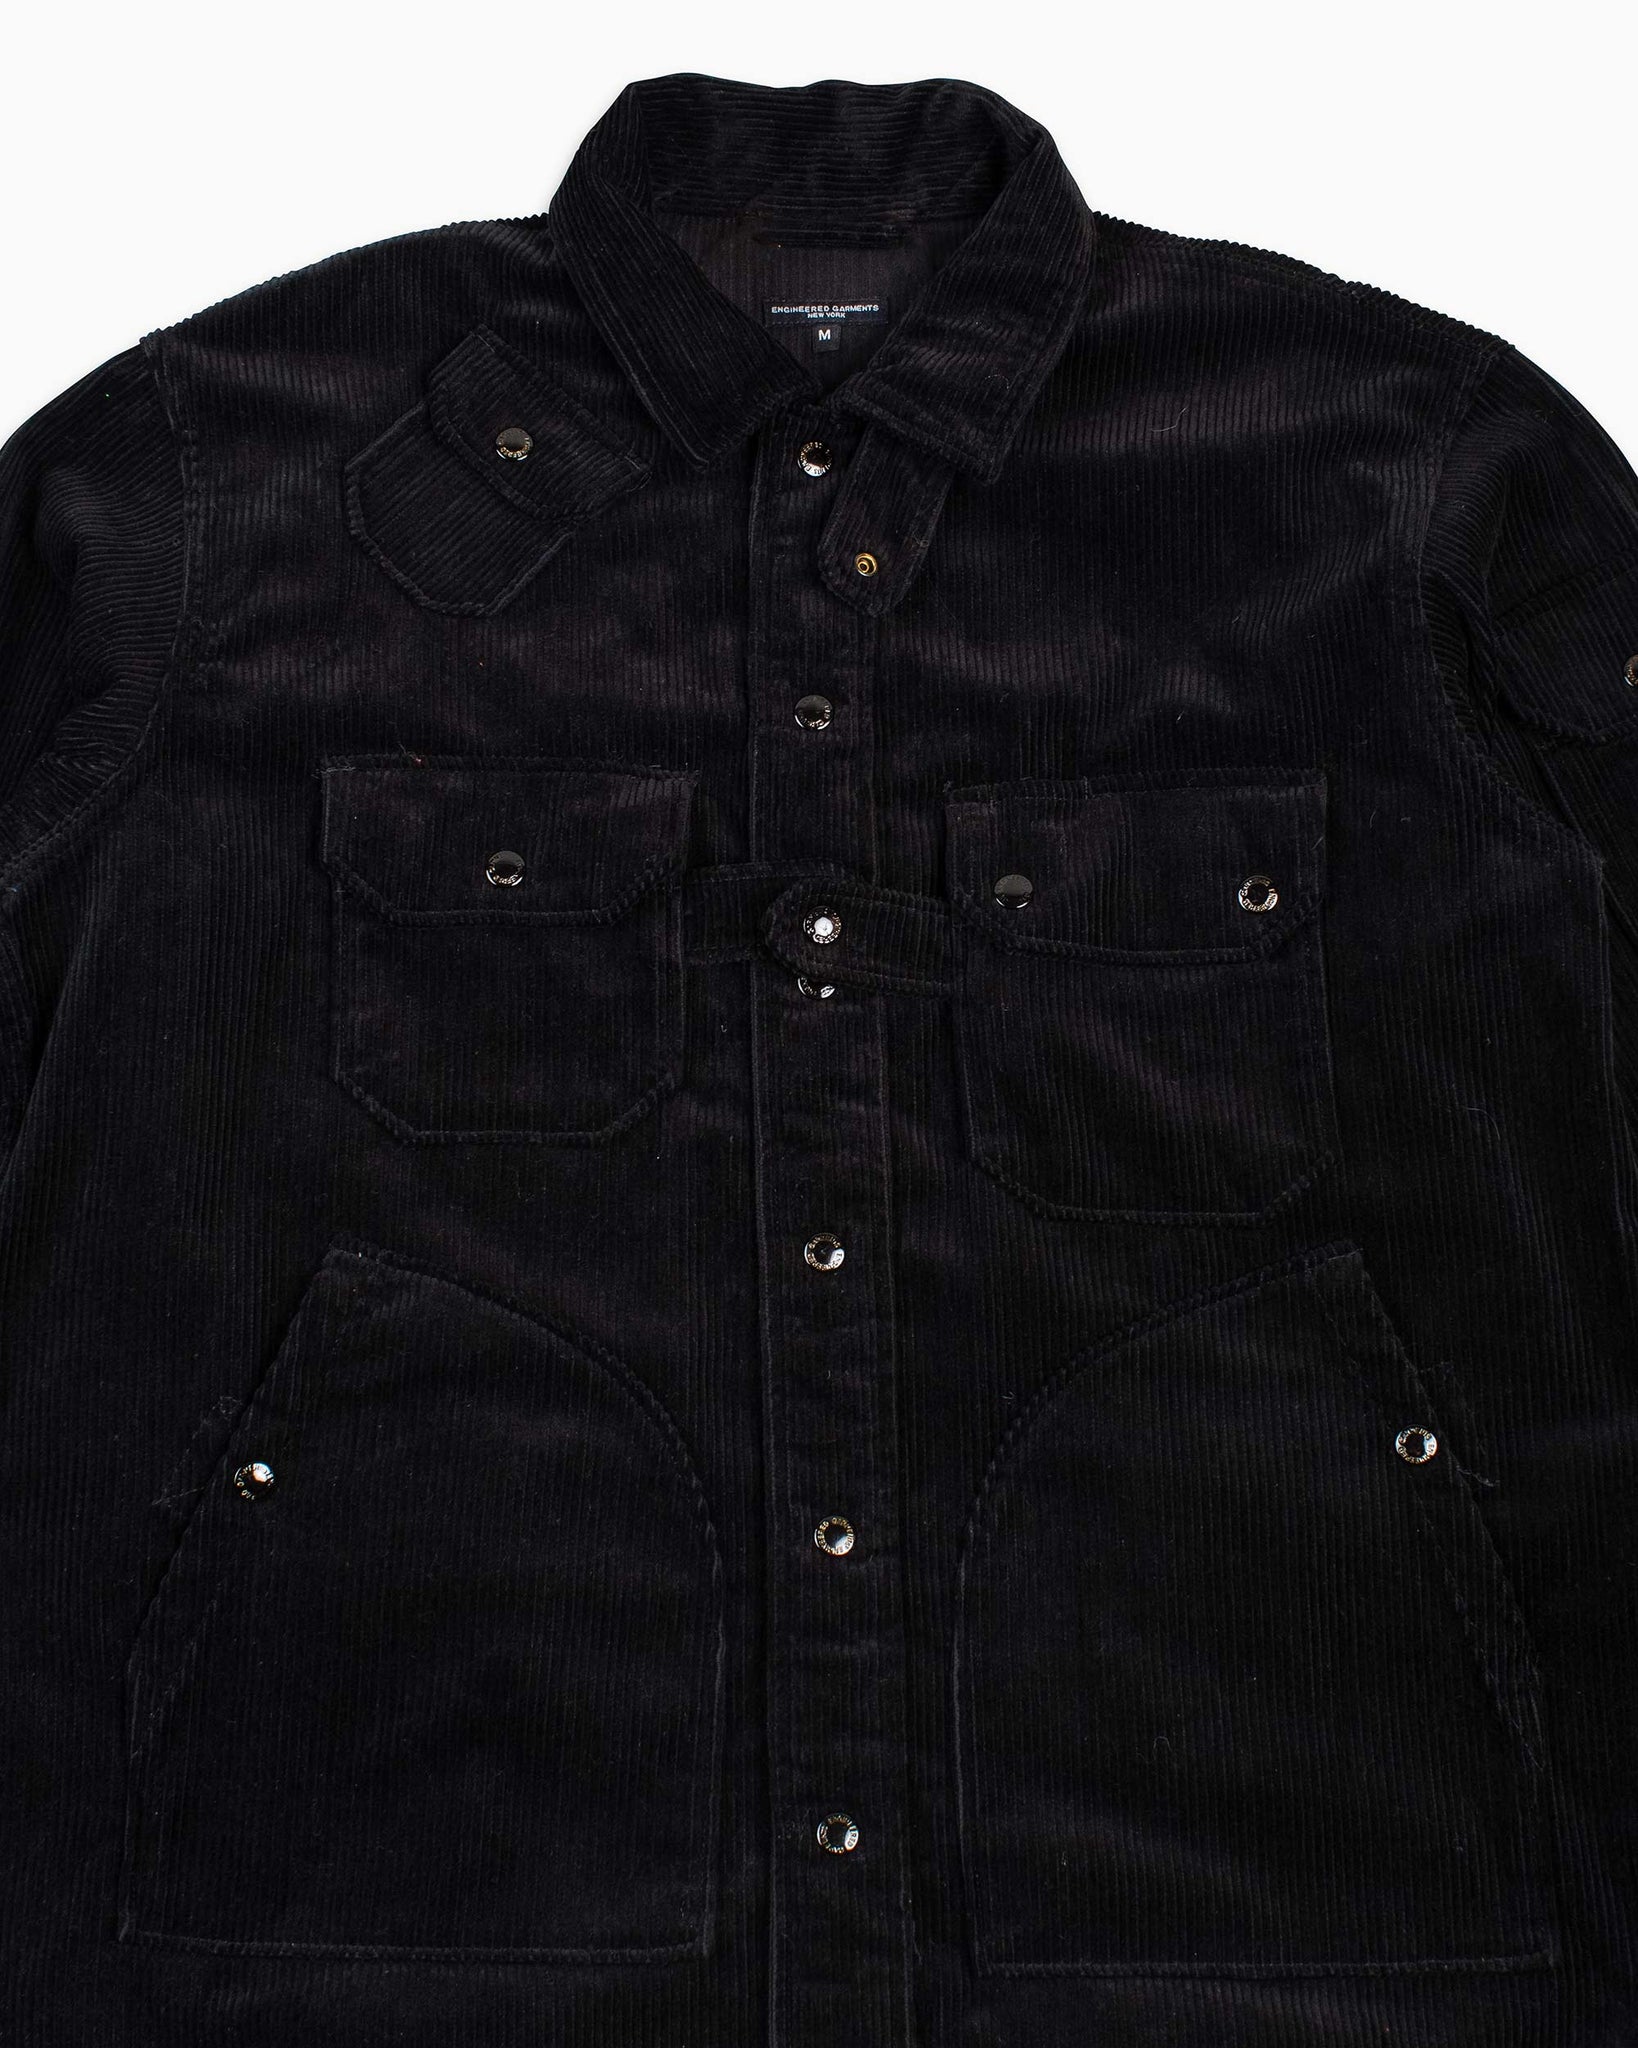 Engineered Garments Explorer Shirt Jacket Black 8W Corduroy Details